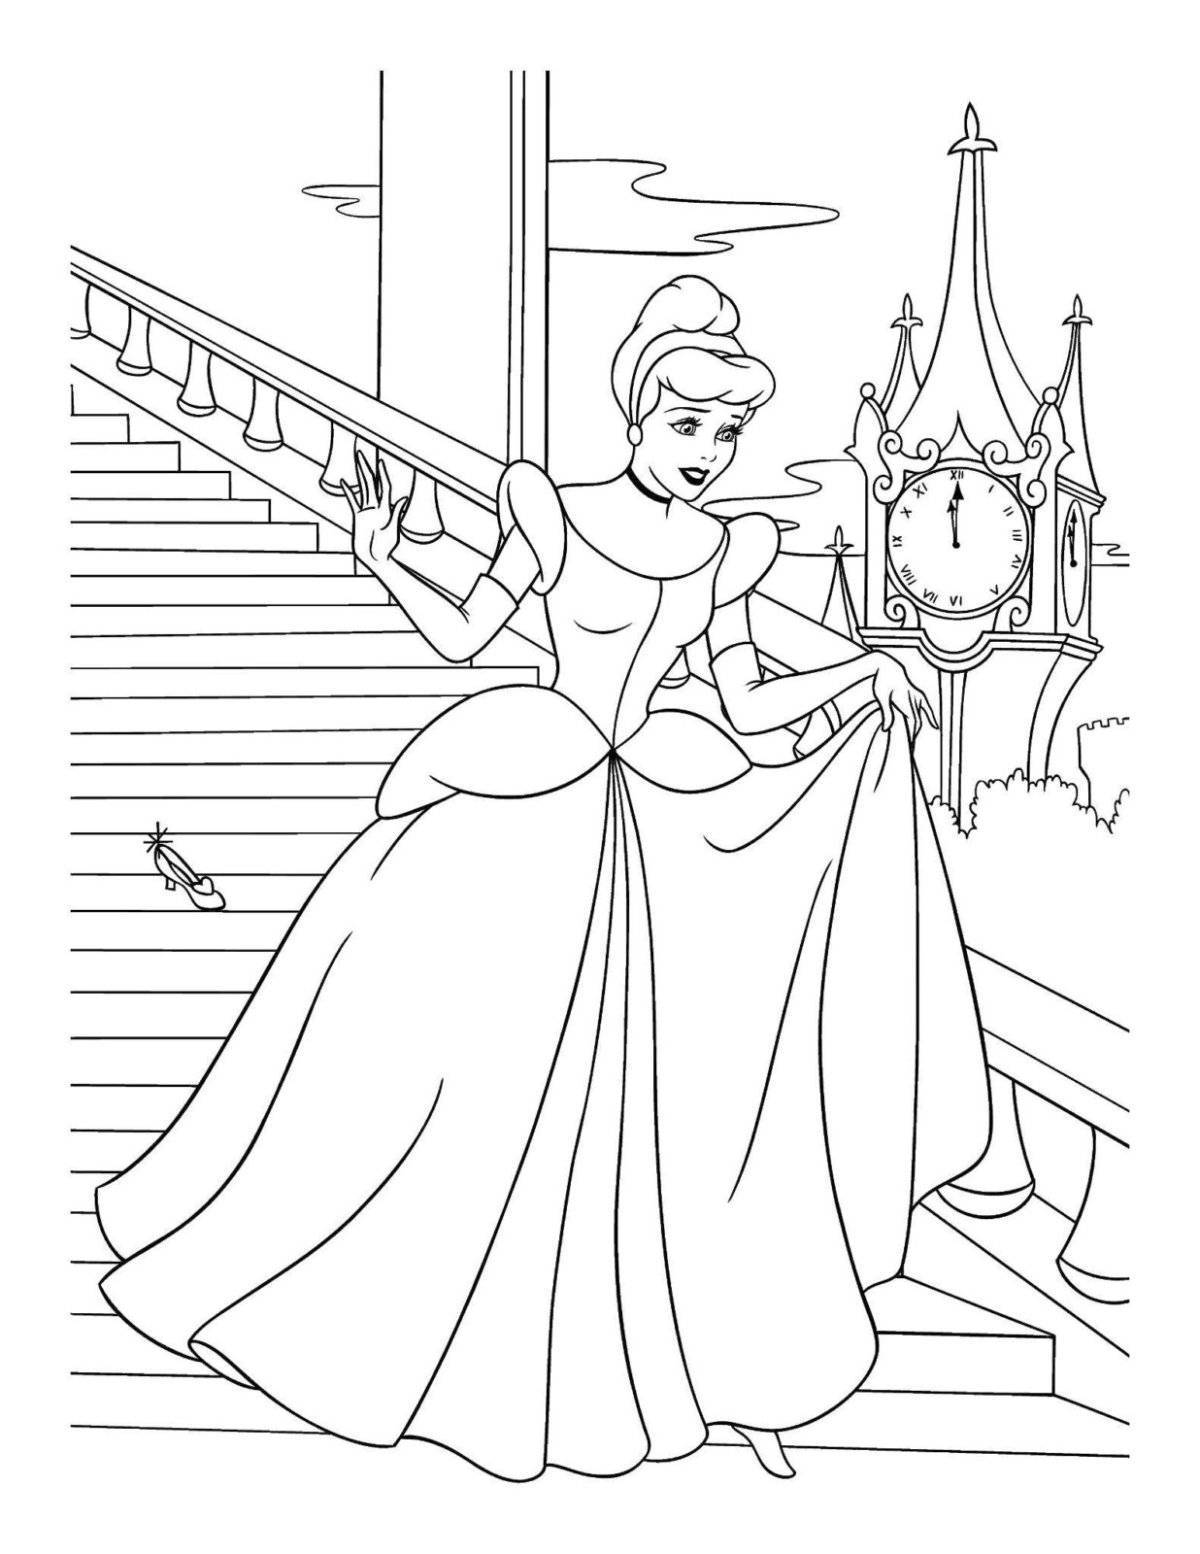 Magic Cinderella coloring book for kids